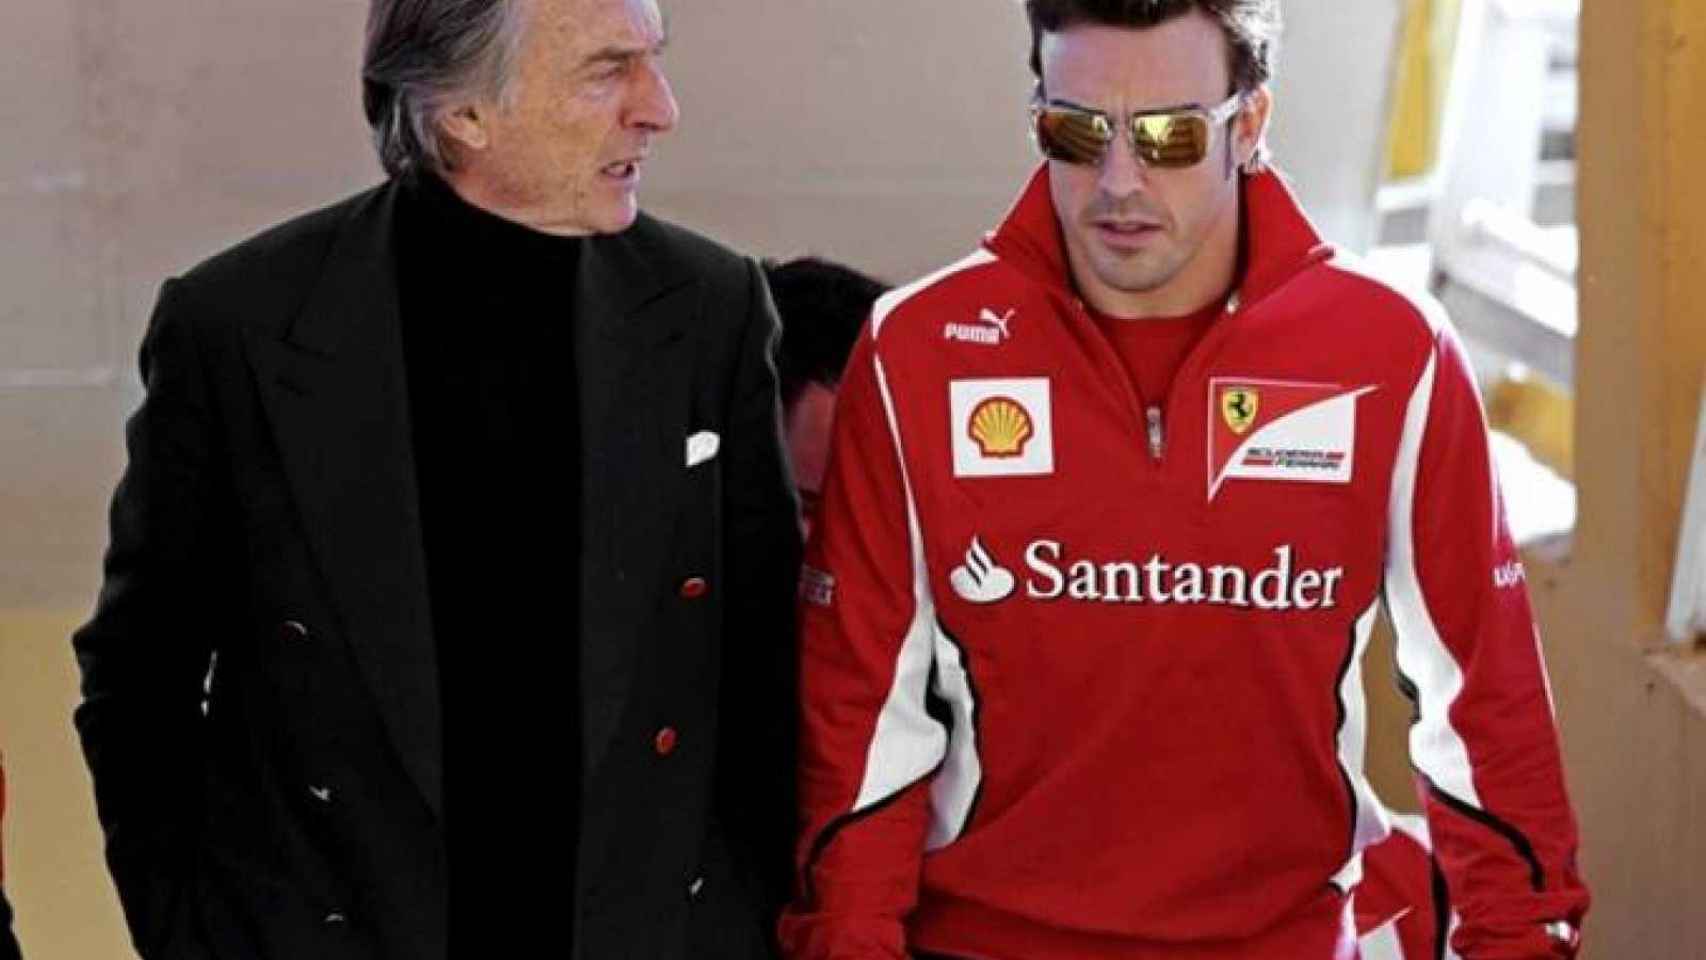 Luca Di Montezemolo y Fernando Alonso durante la etapa de ambos en Ferrari